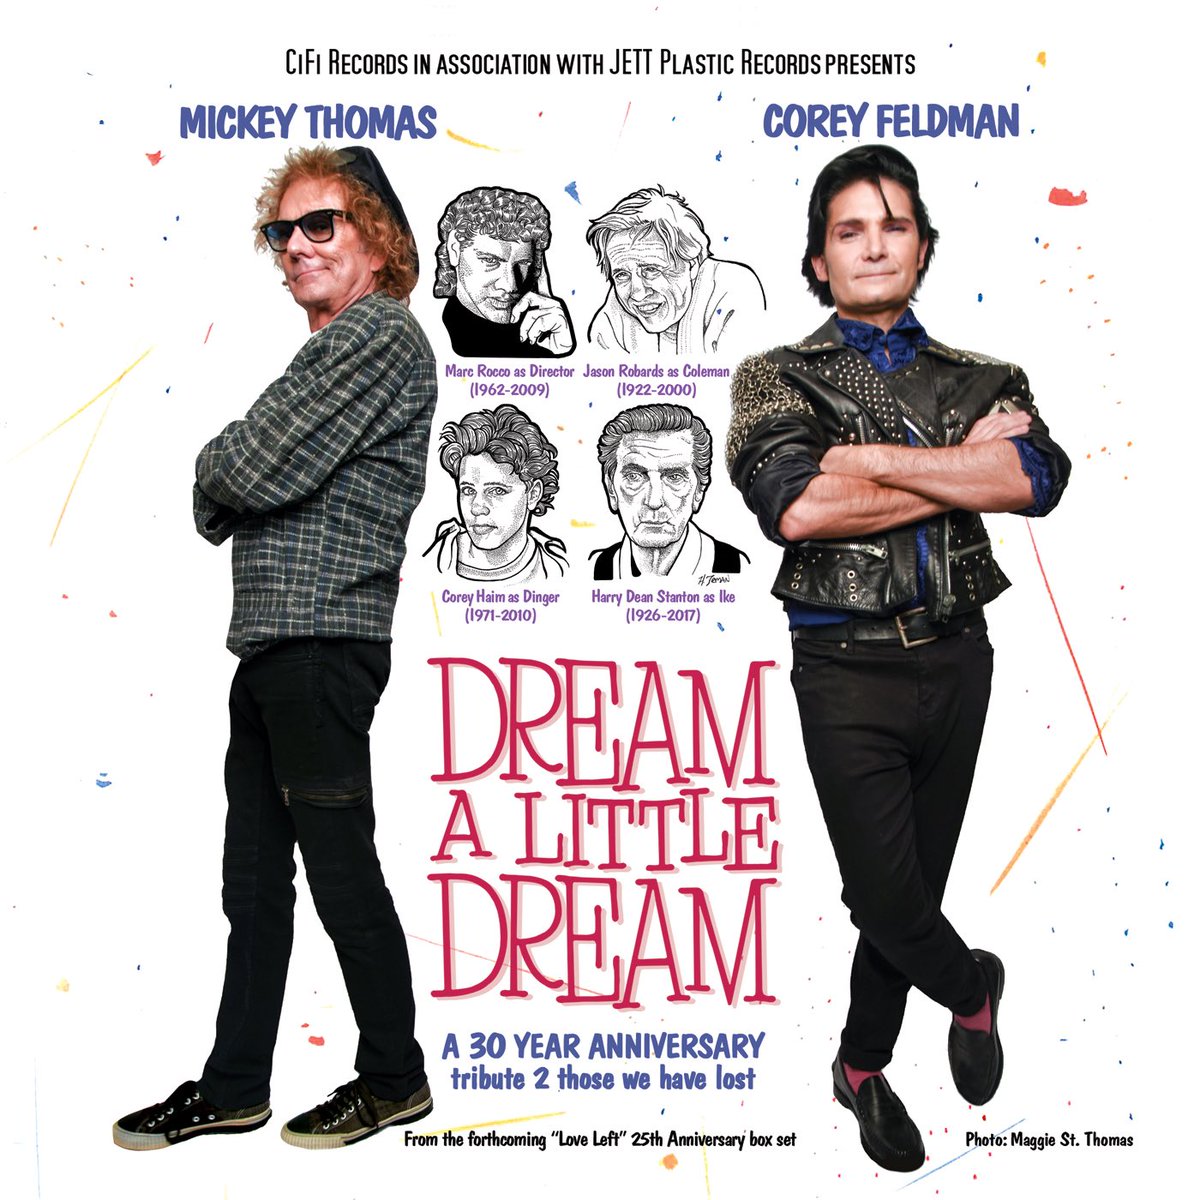 Corey Feldman and Mickey Thomas - "Dream A Little Dream"